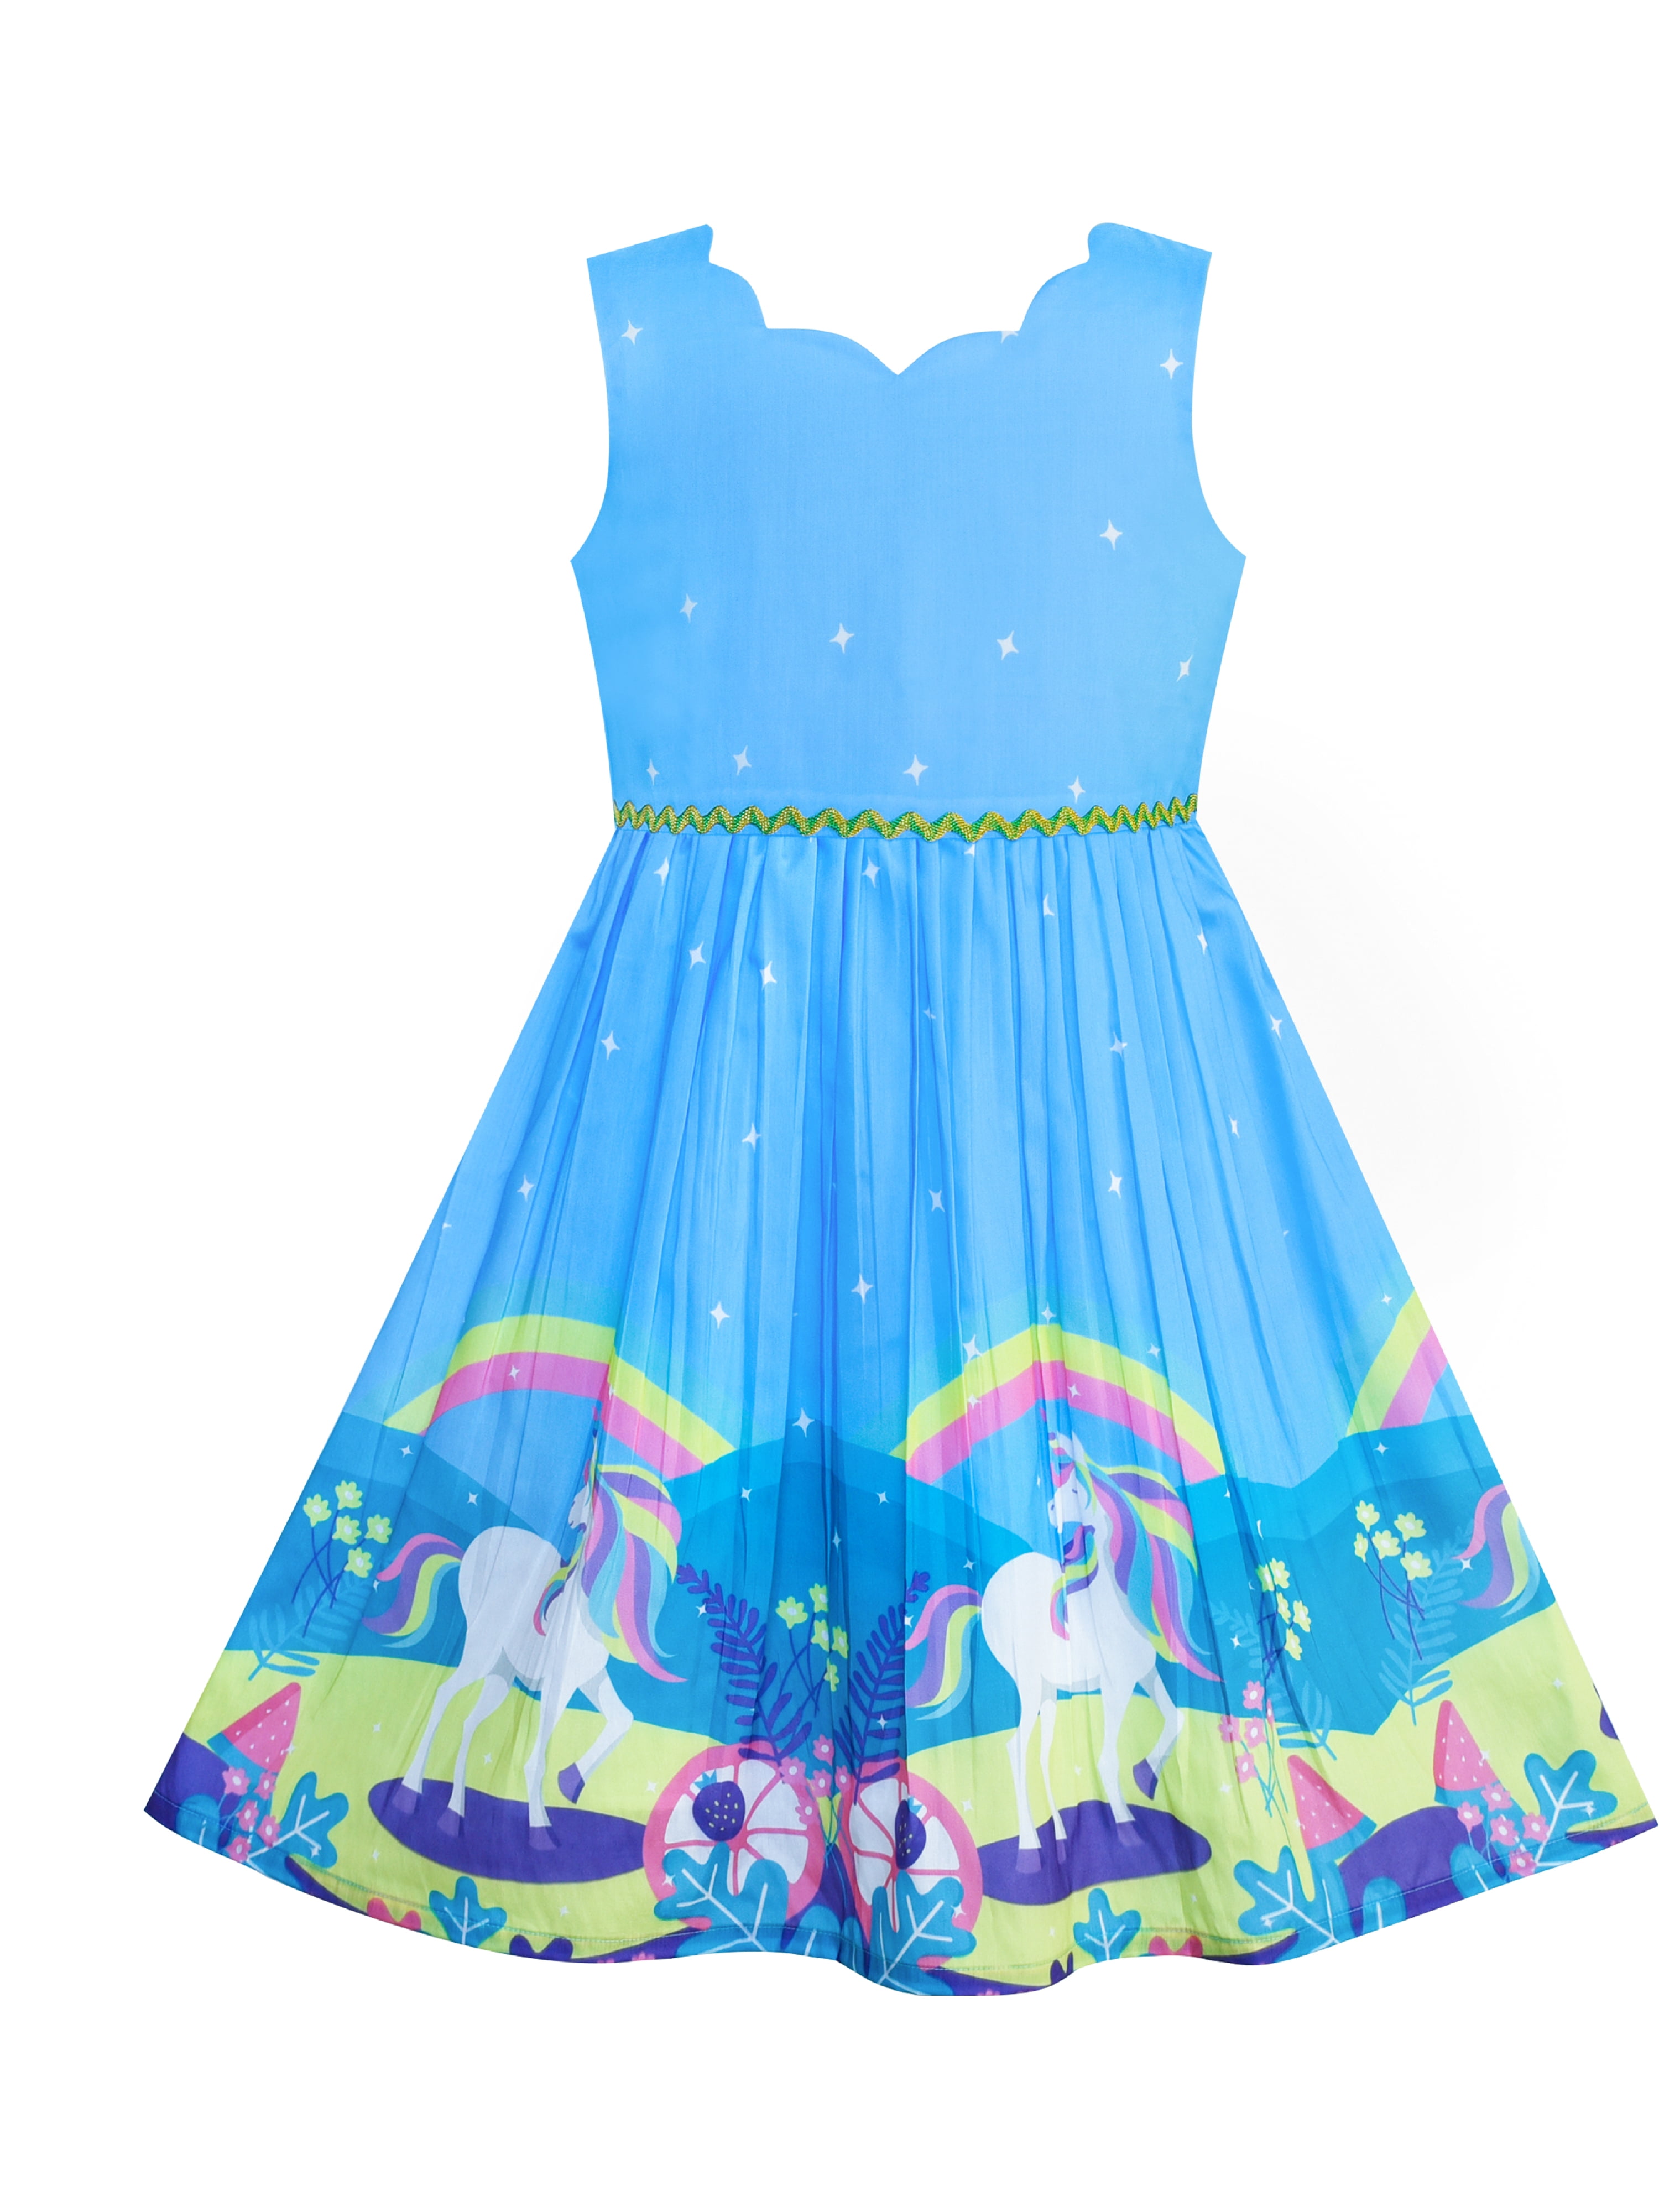 Kids Girls Off Shoulder Dress Rainbow Fashion Party Top Summer Dresses 5-13 Year 